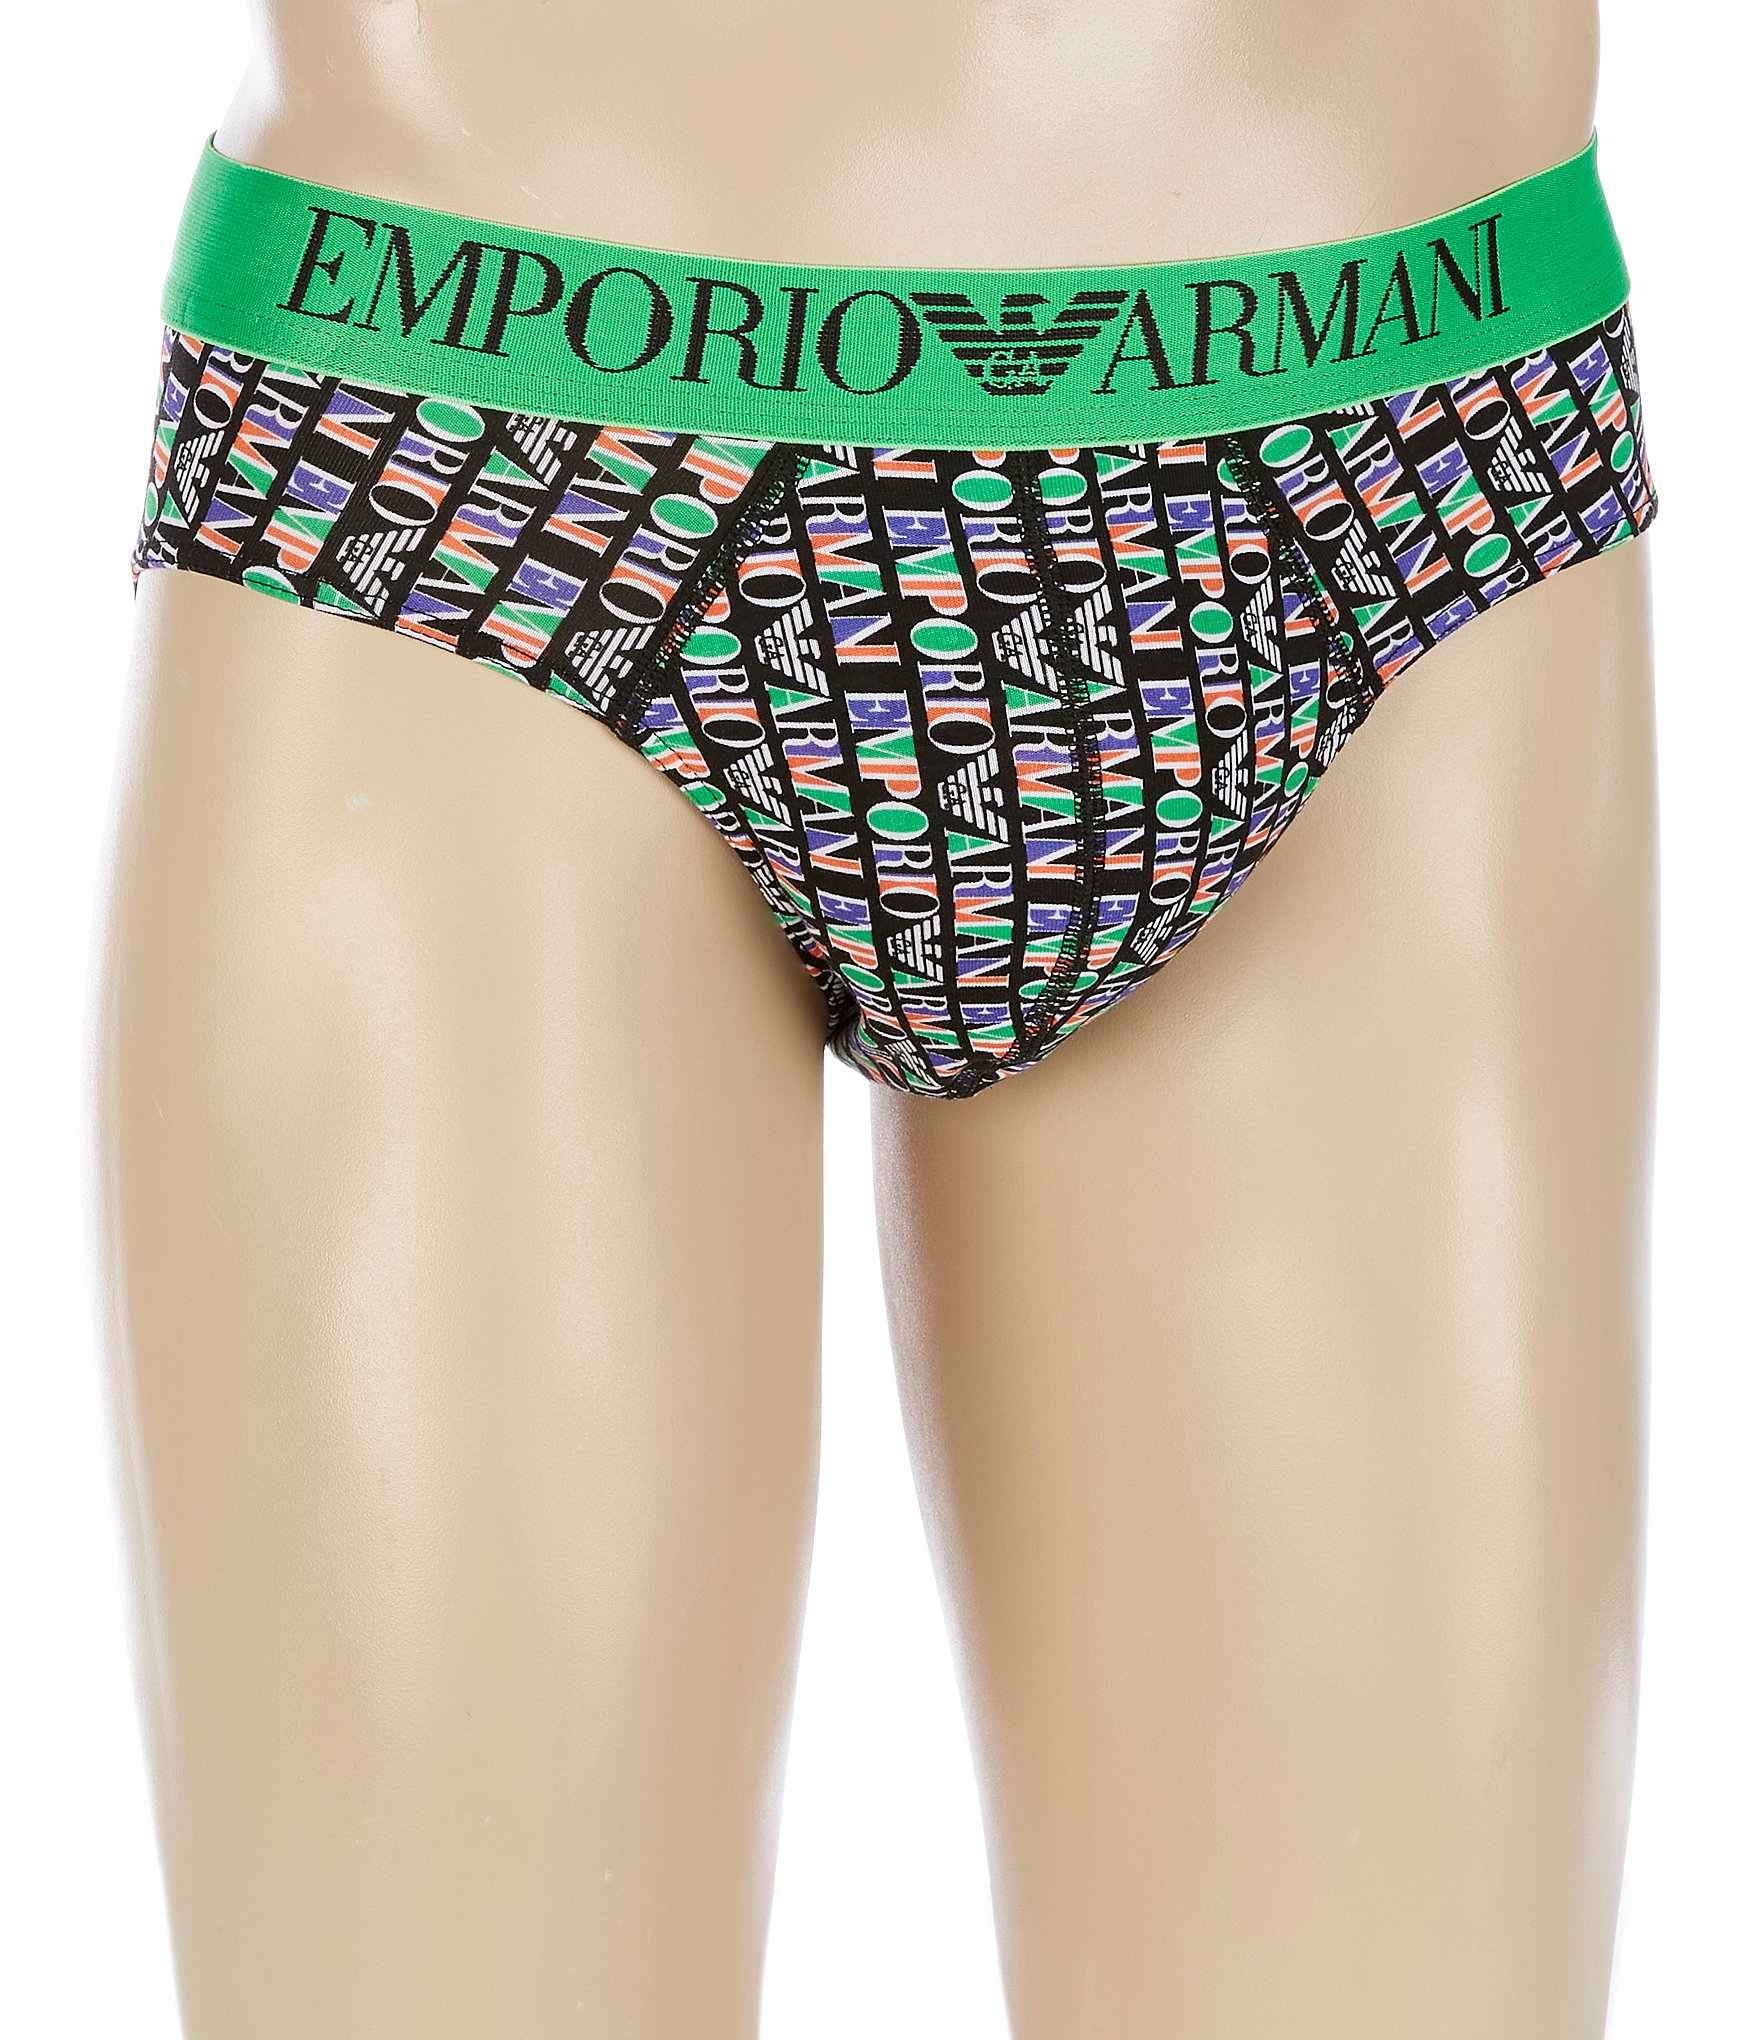 Emporio Armani Christmas underwears